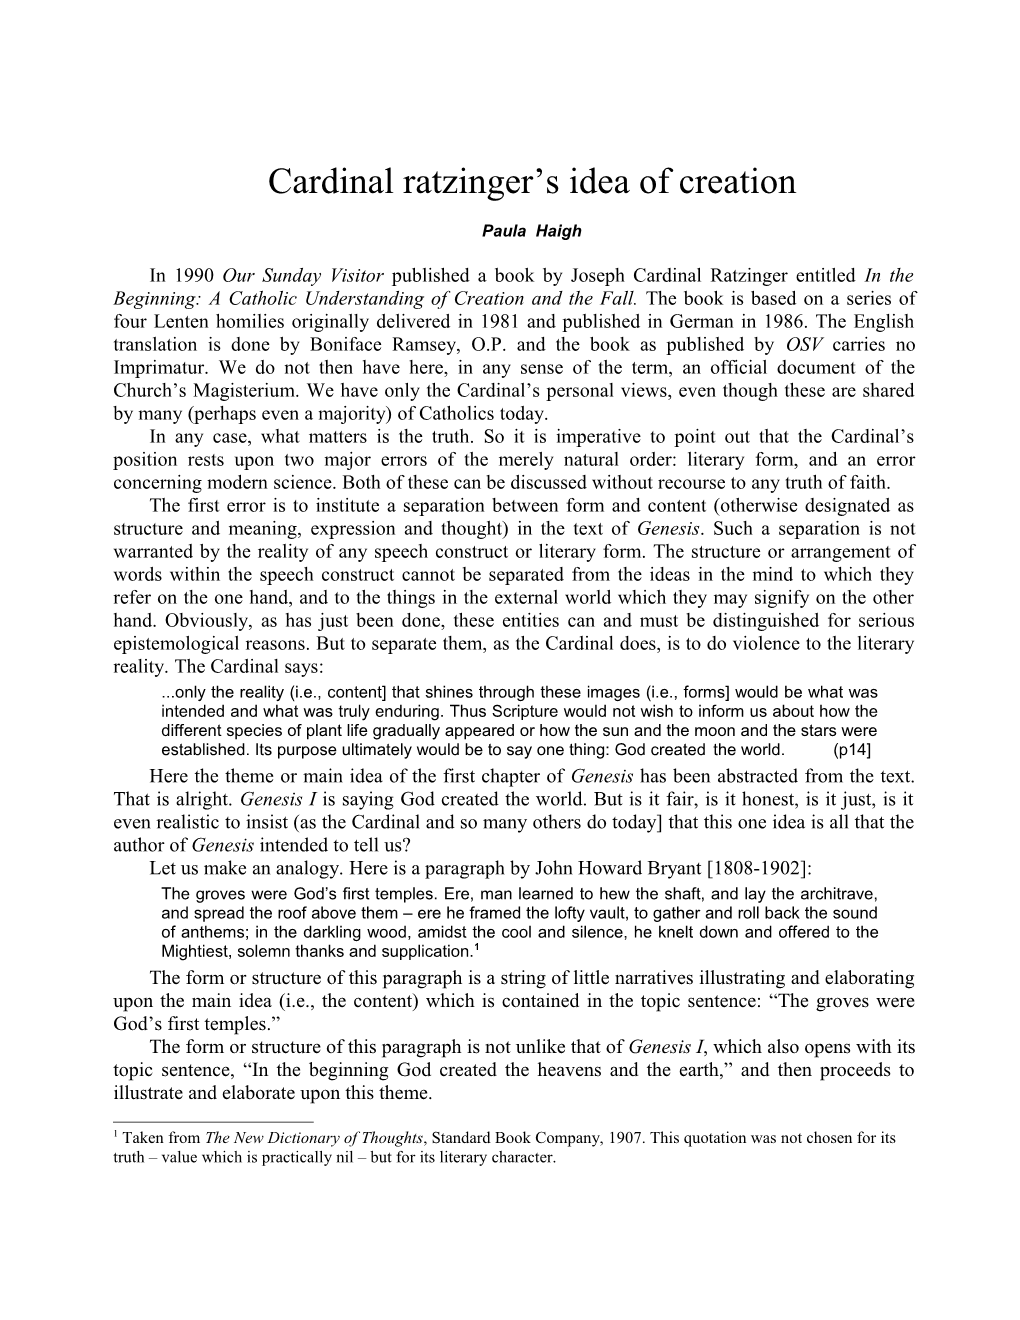 Cardinal Ratzinger S Idea of Creation